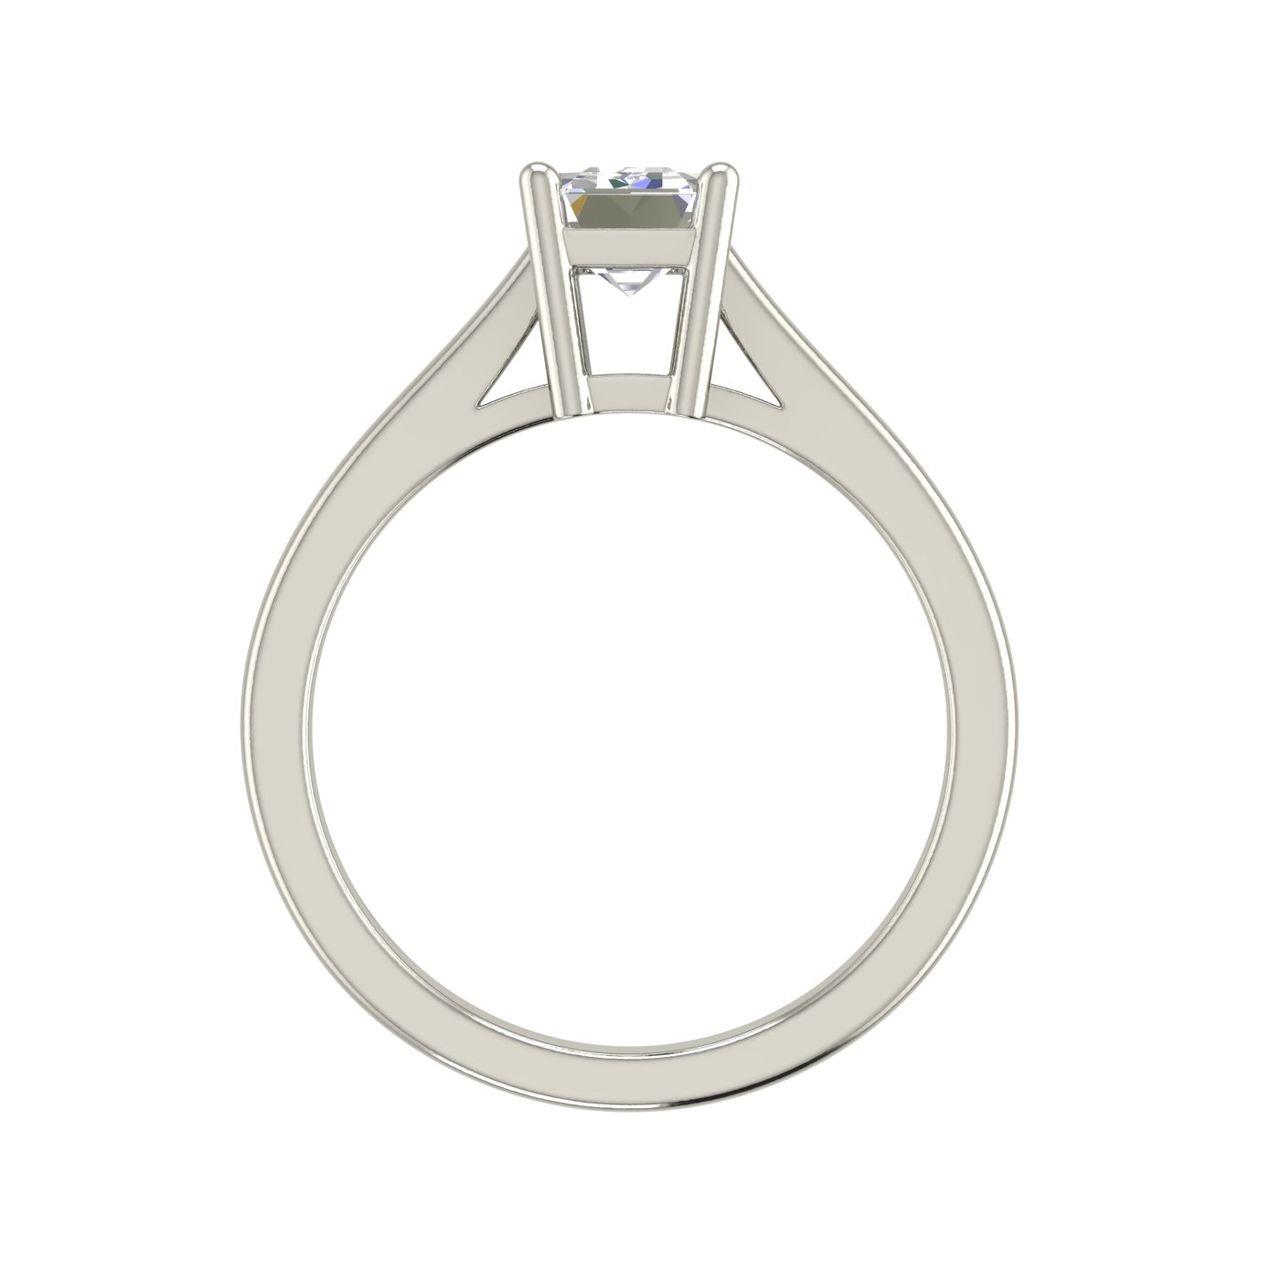 4 Prong 1 Carat Emerald Cut Diamond Engagement Ring